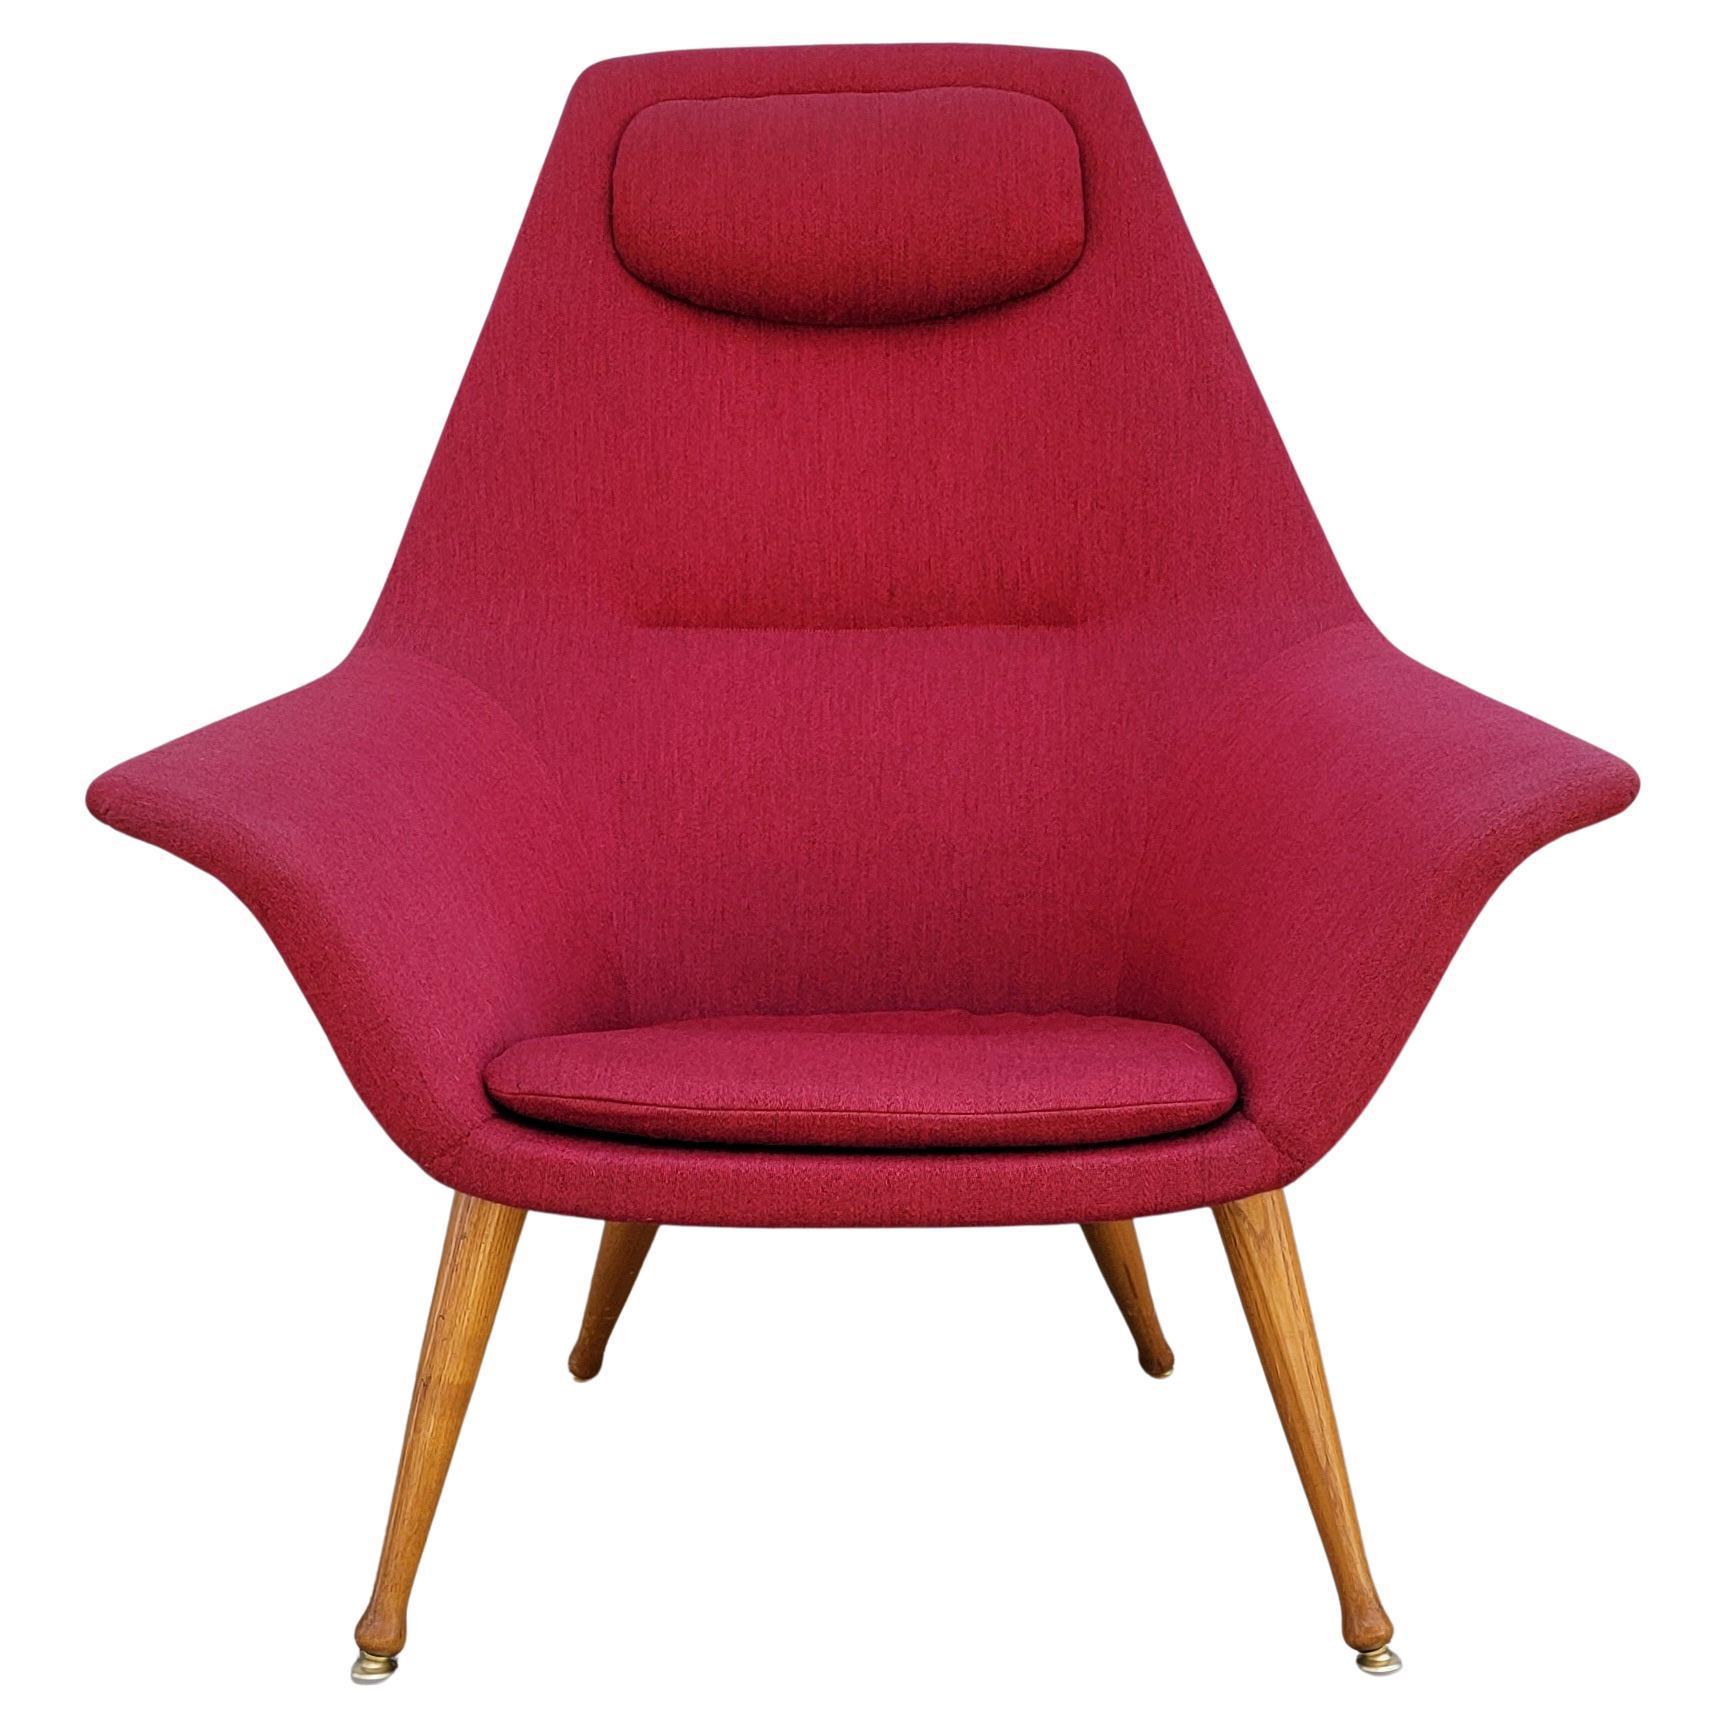 Torbjorn Afdal "Butterfly" Danish Modern Upholstered Lounge Chair